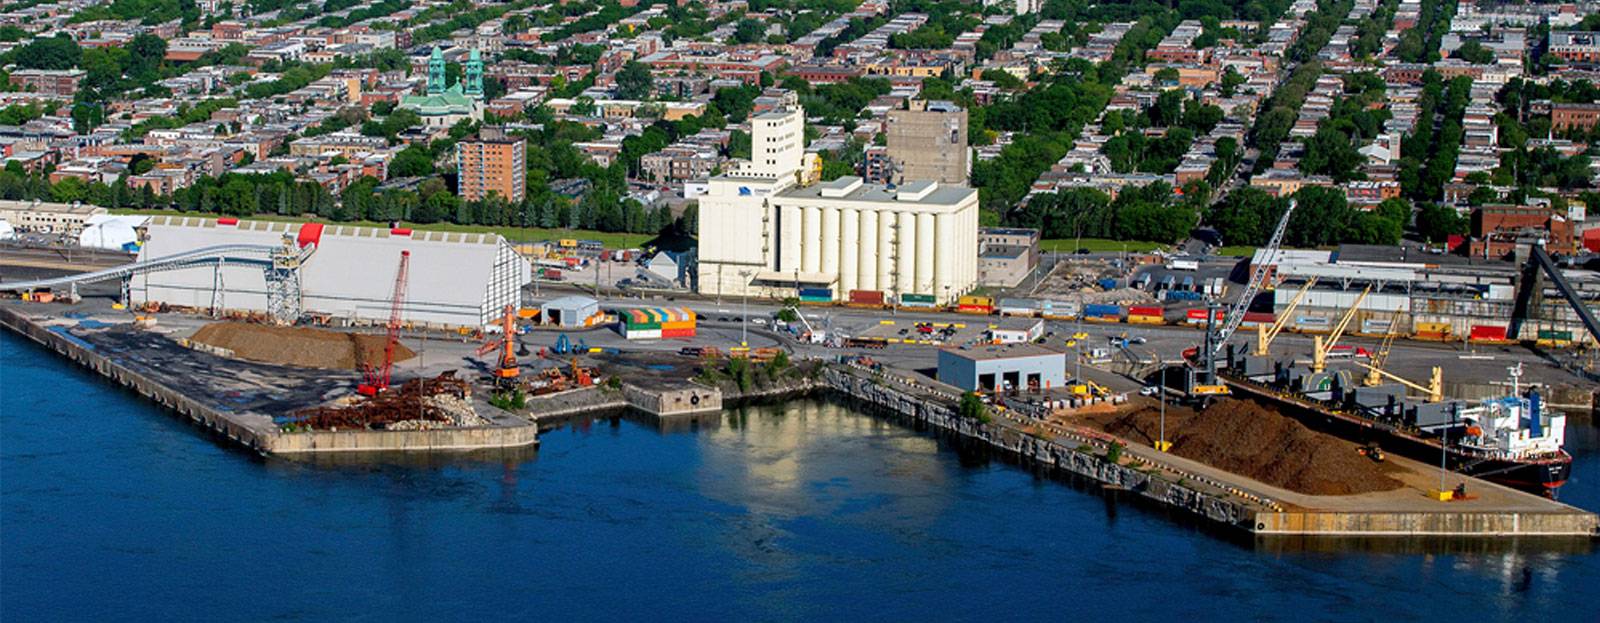 Port of Montréal to add new grain terminal equipment